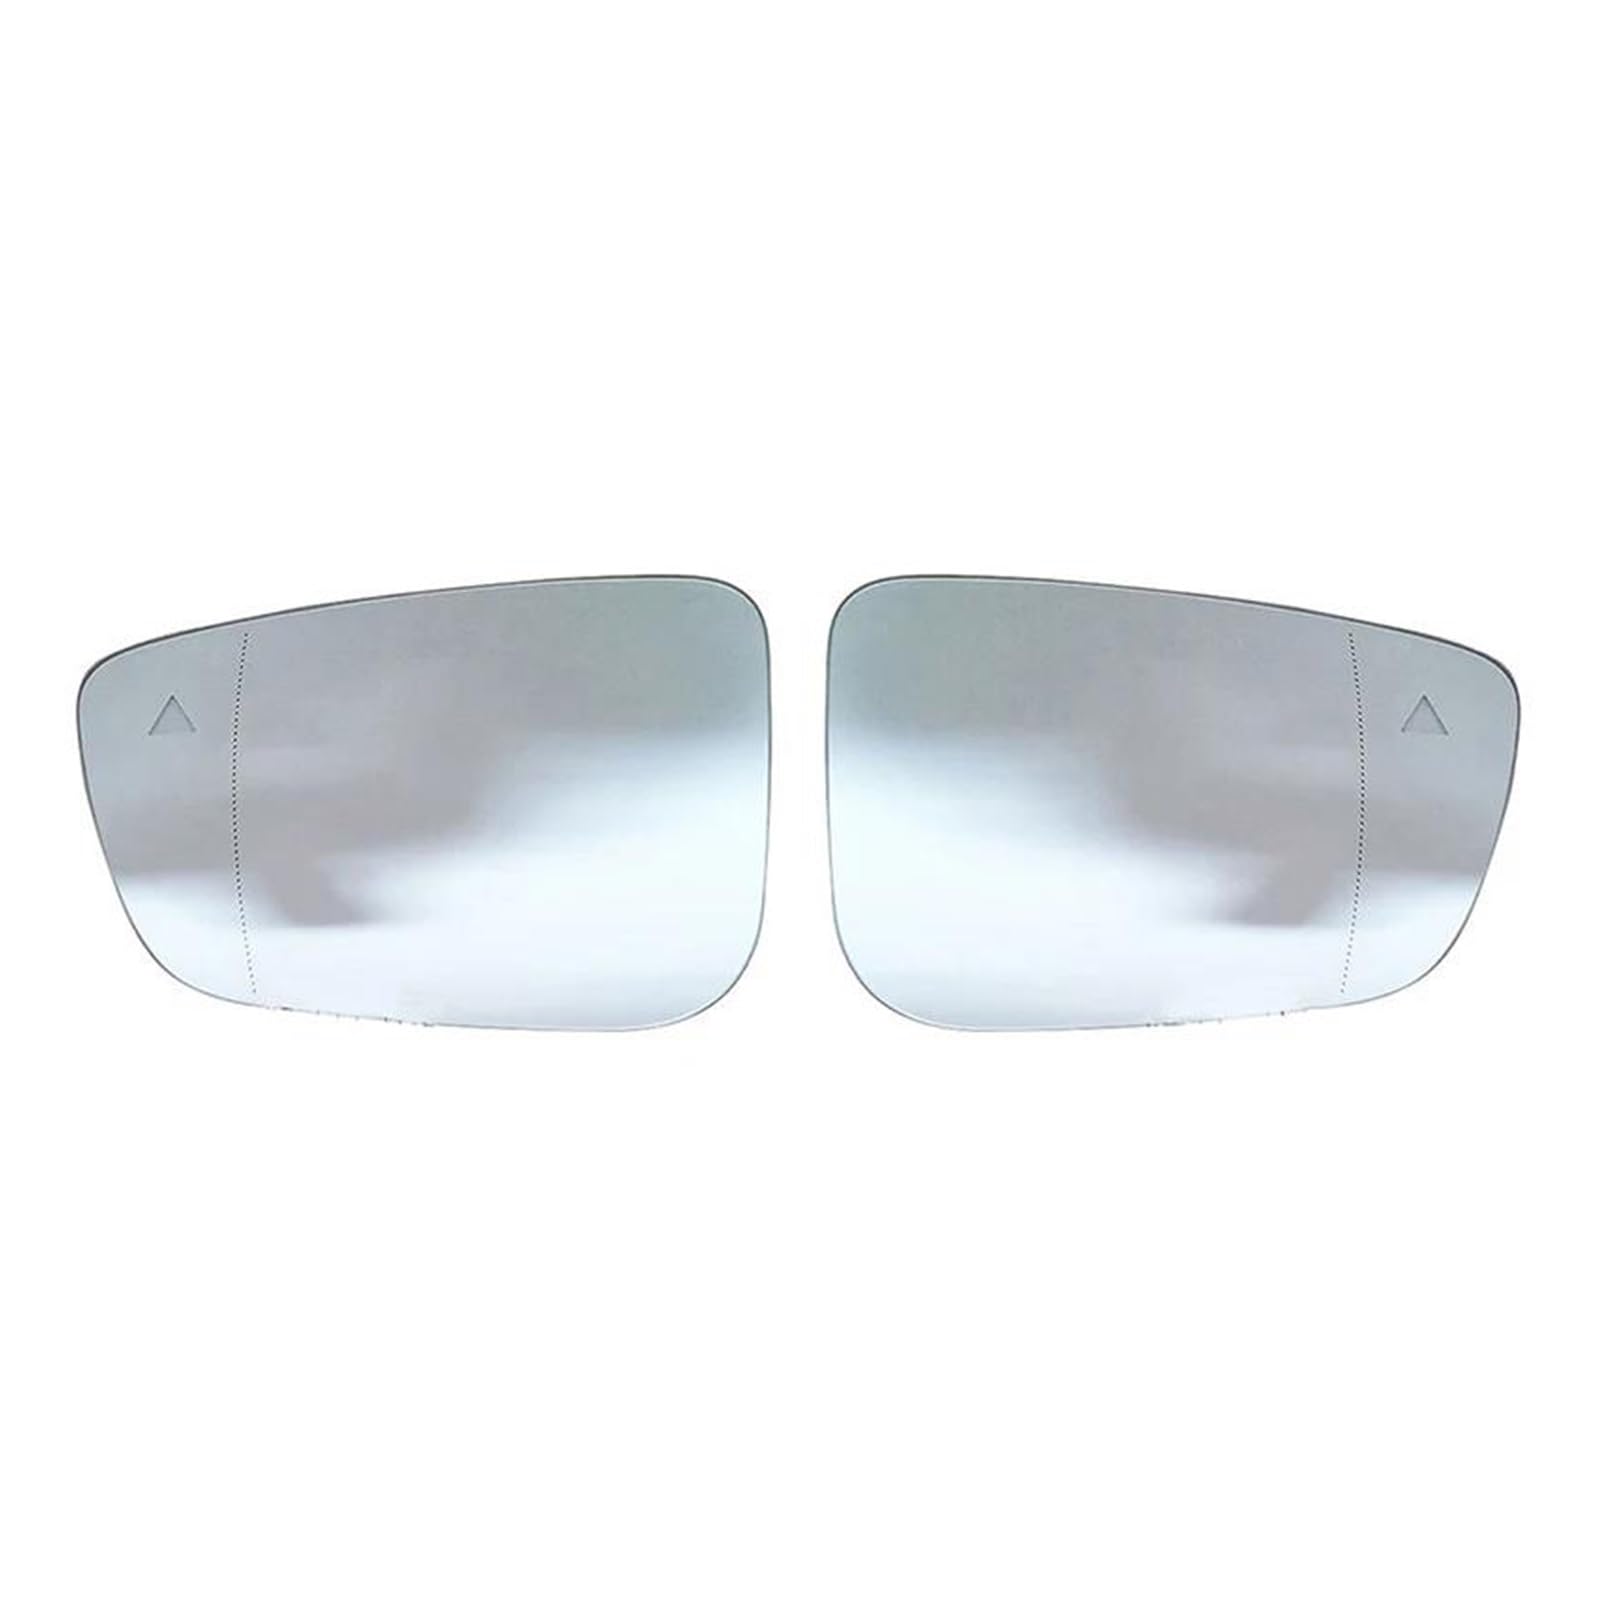 Für 3er G20 G21 5er G30 G31 G32 G38 7er G11 G12 2016-2020 Links Rechts Beheizter Toter-Winkel-Warnflügel Rückspiegelglas Rückspiegel Glas Spiegelglas(A pair) von BTHMGBAE